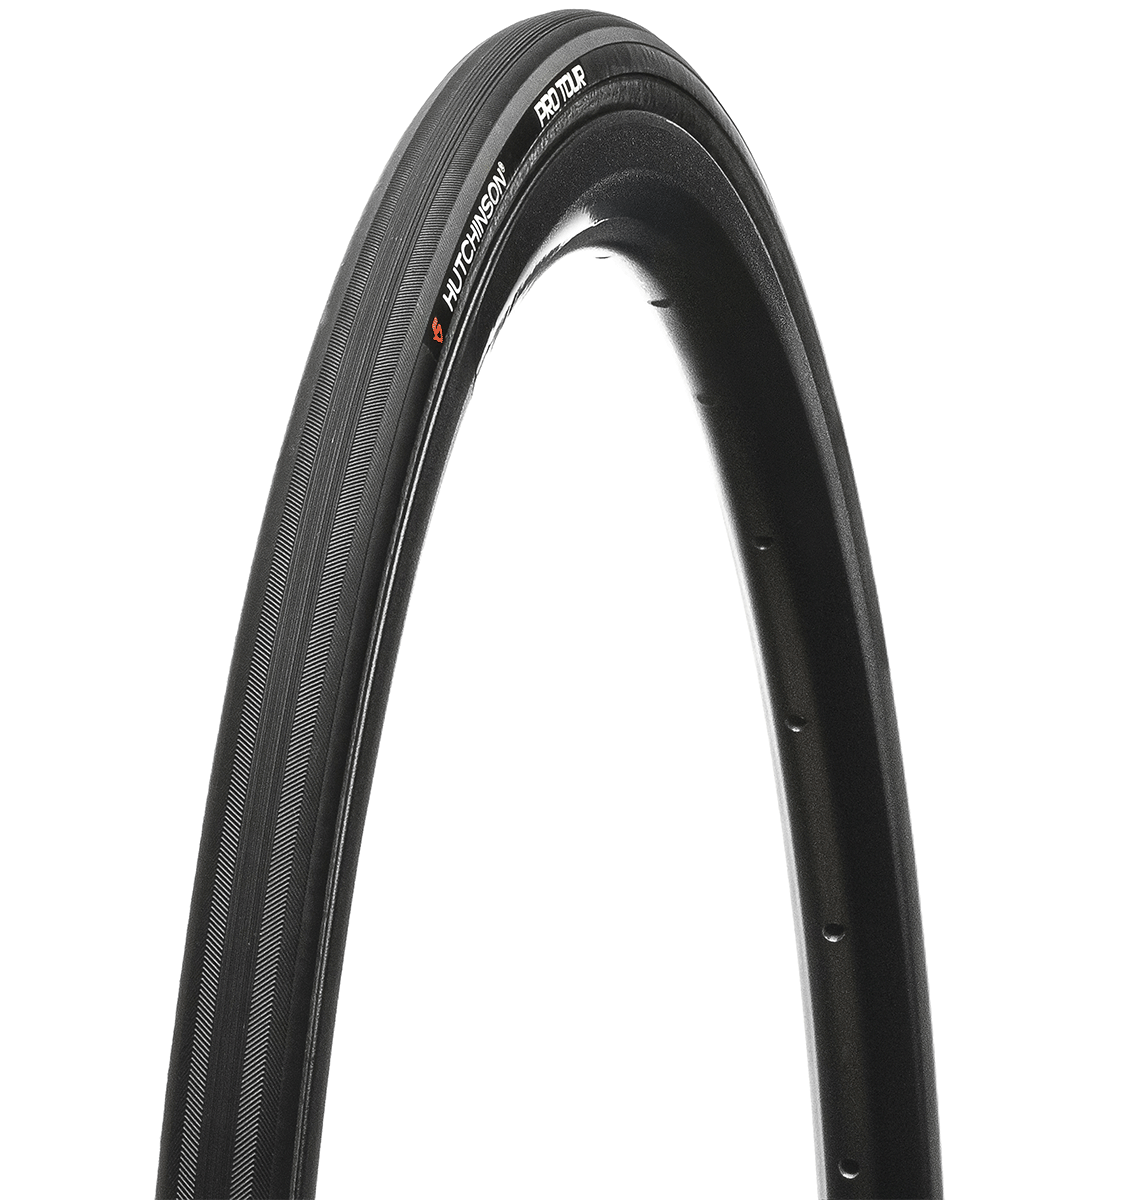 700 x 25 Tubeless Black 317g each TWO Hutchinson Intensive II Road Bike Tires 